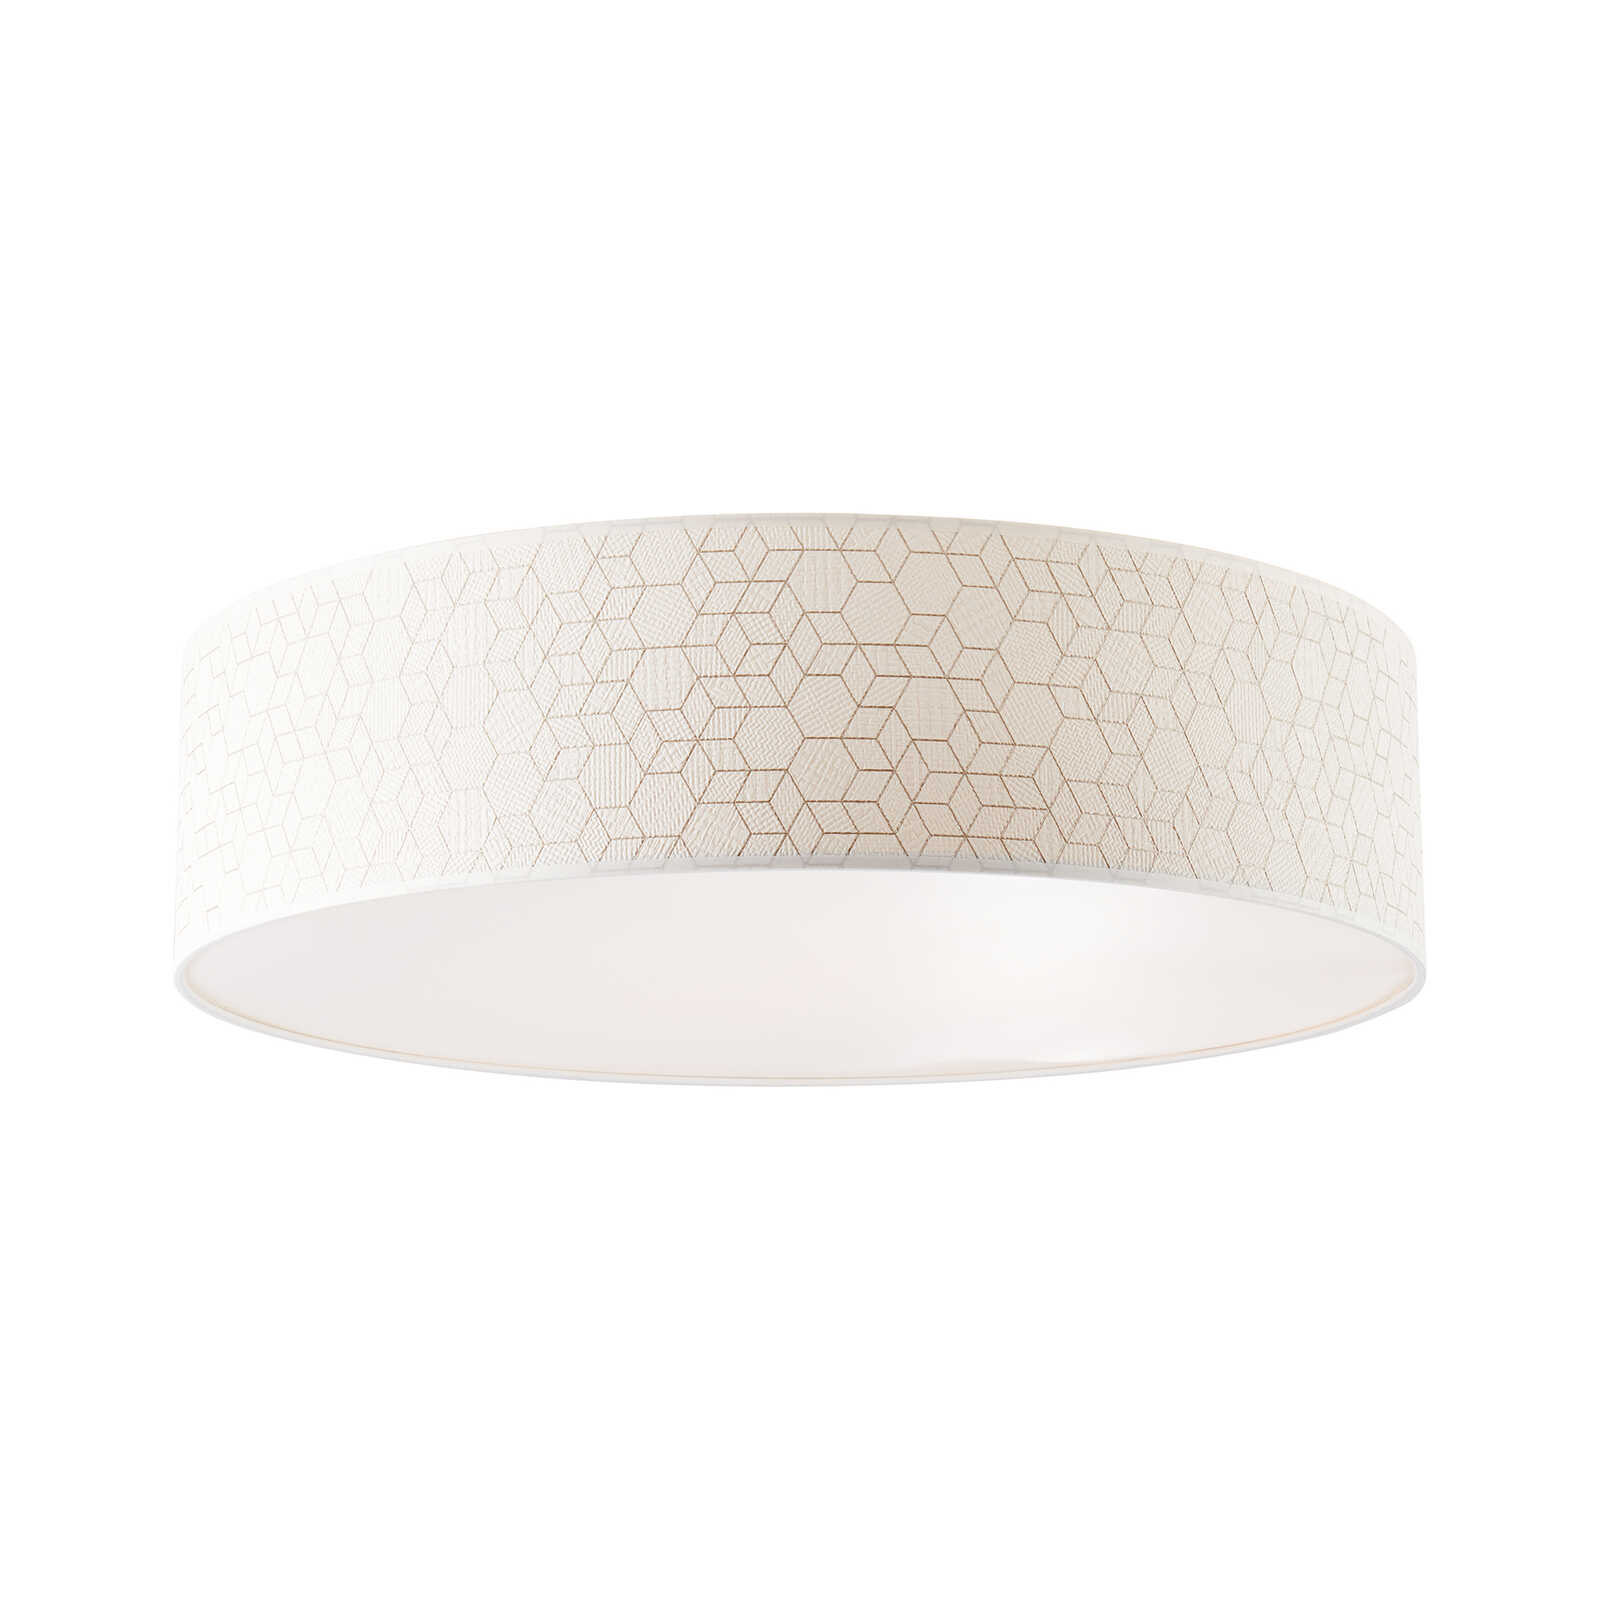 Textile ceiling light - Hannes 10 - White
